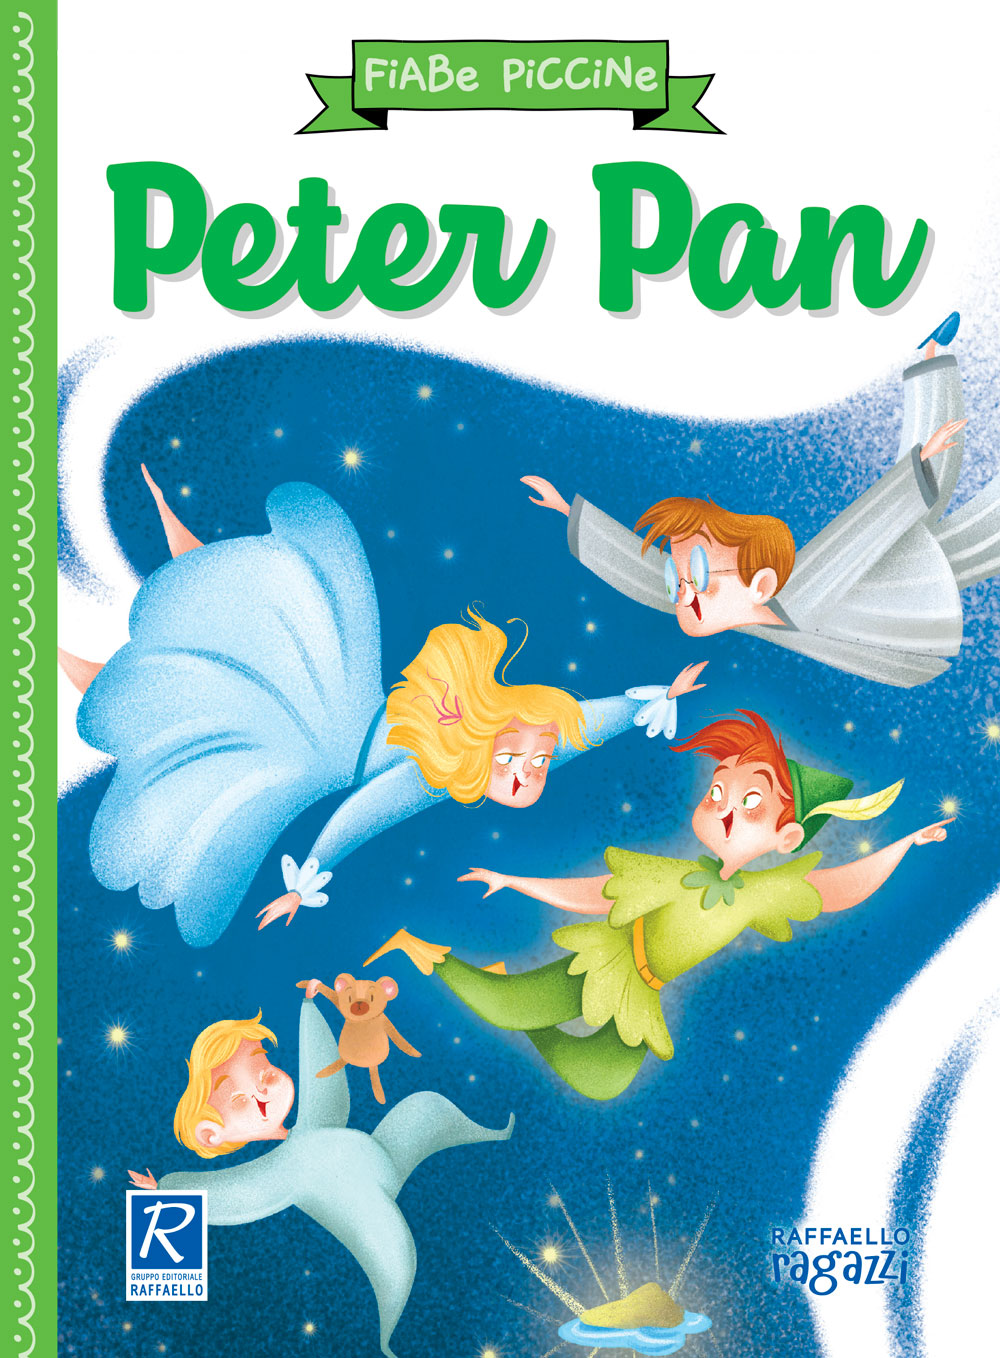 Peter Pan Raffaello Libri